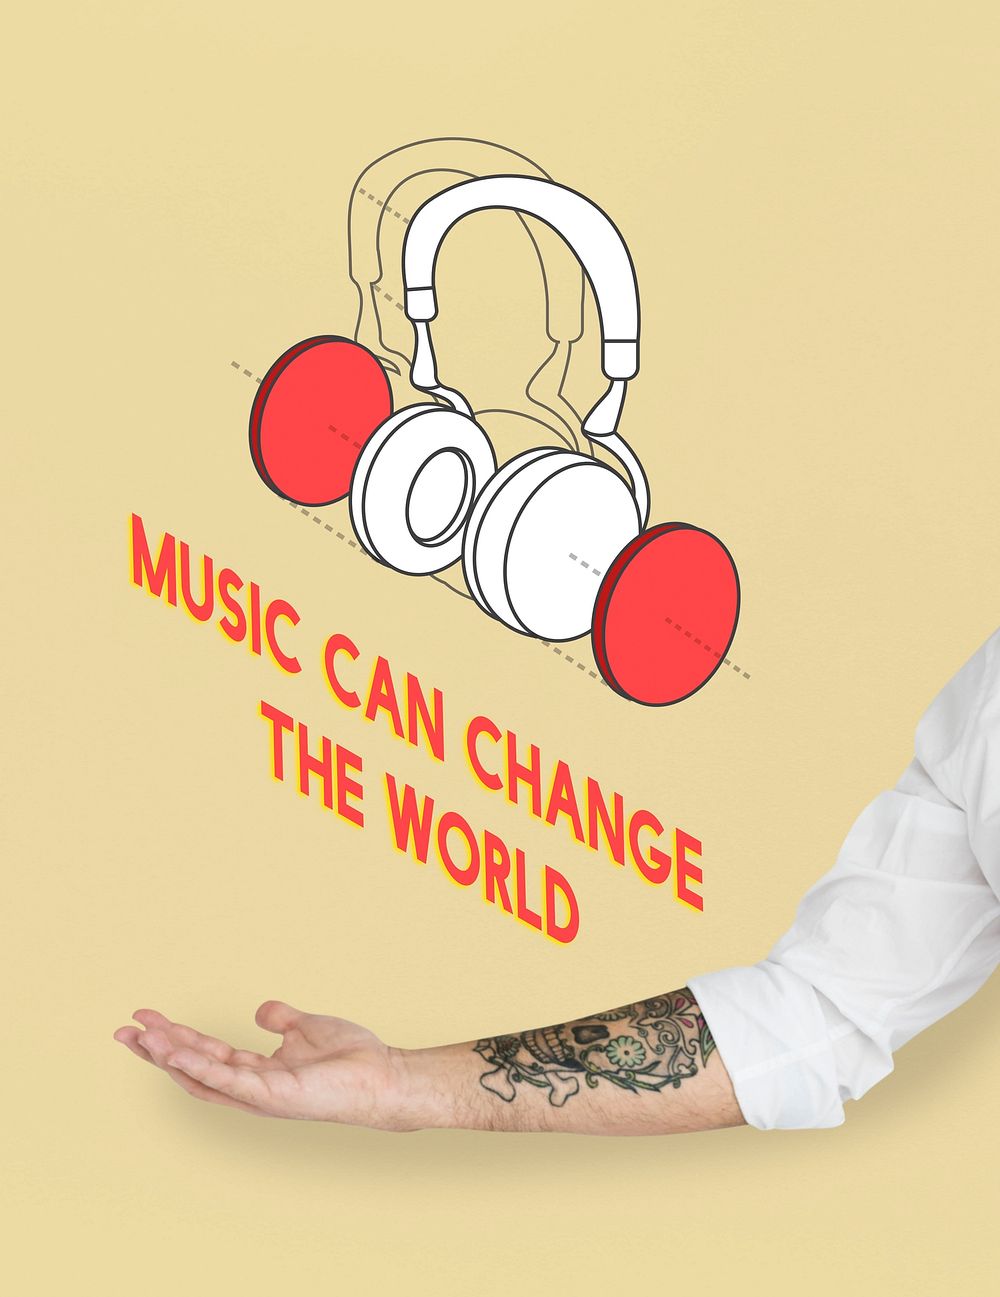 Music entertainment headphones icon graphic